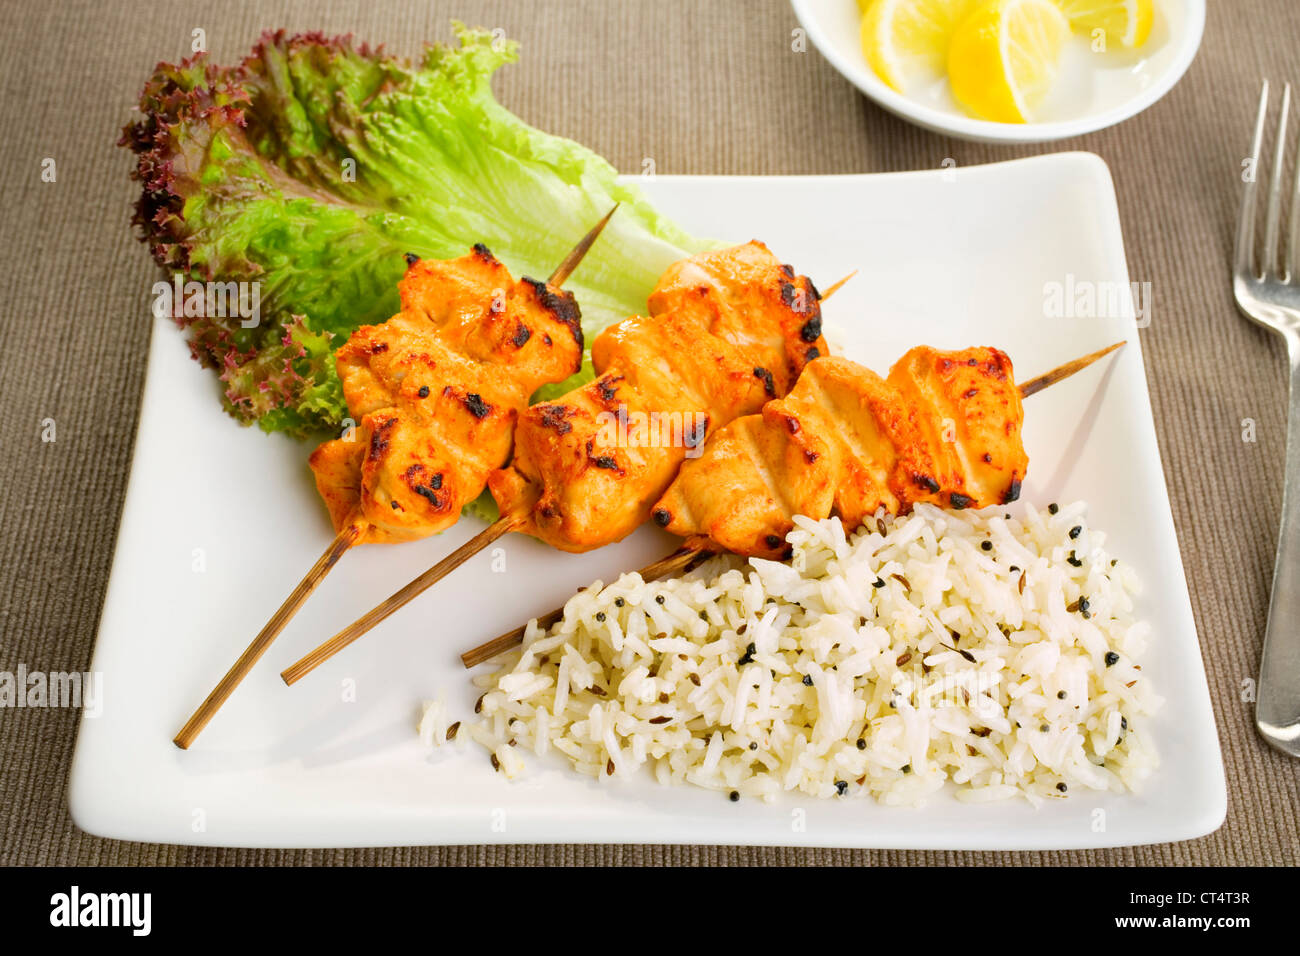 Tandoori chicken with basmati rice and salad. Stock Photo